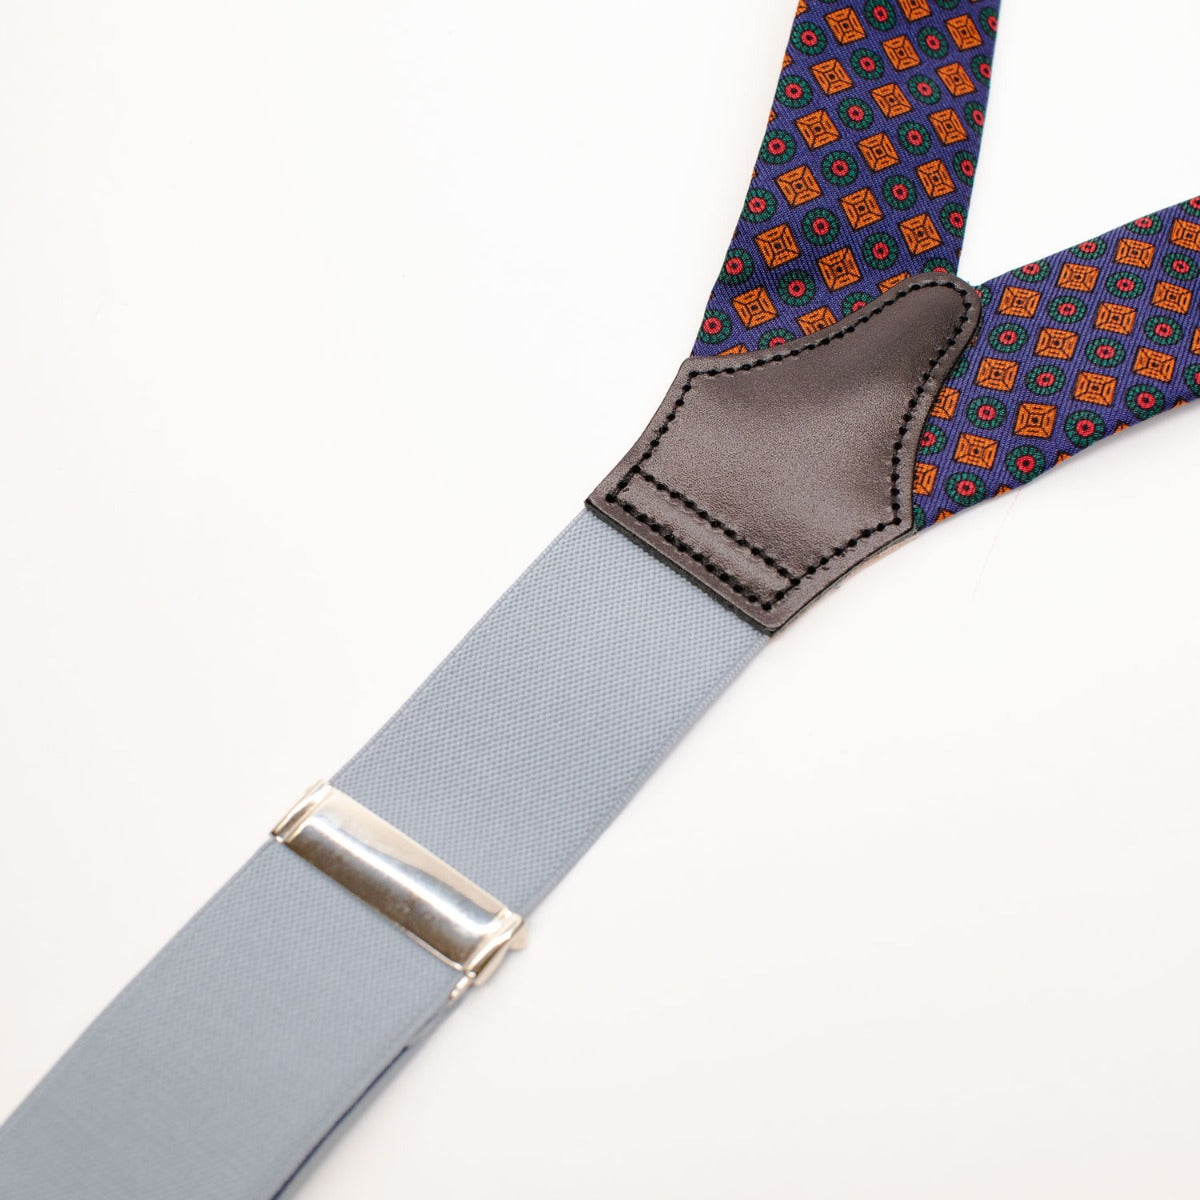 Adjustable back KirbyAllison.com Sovereign Grade Navy/White Dot Braces in a blue and orange pattern.